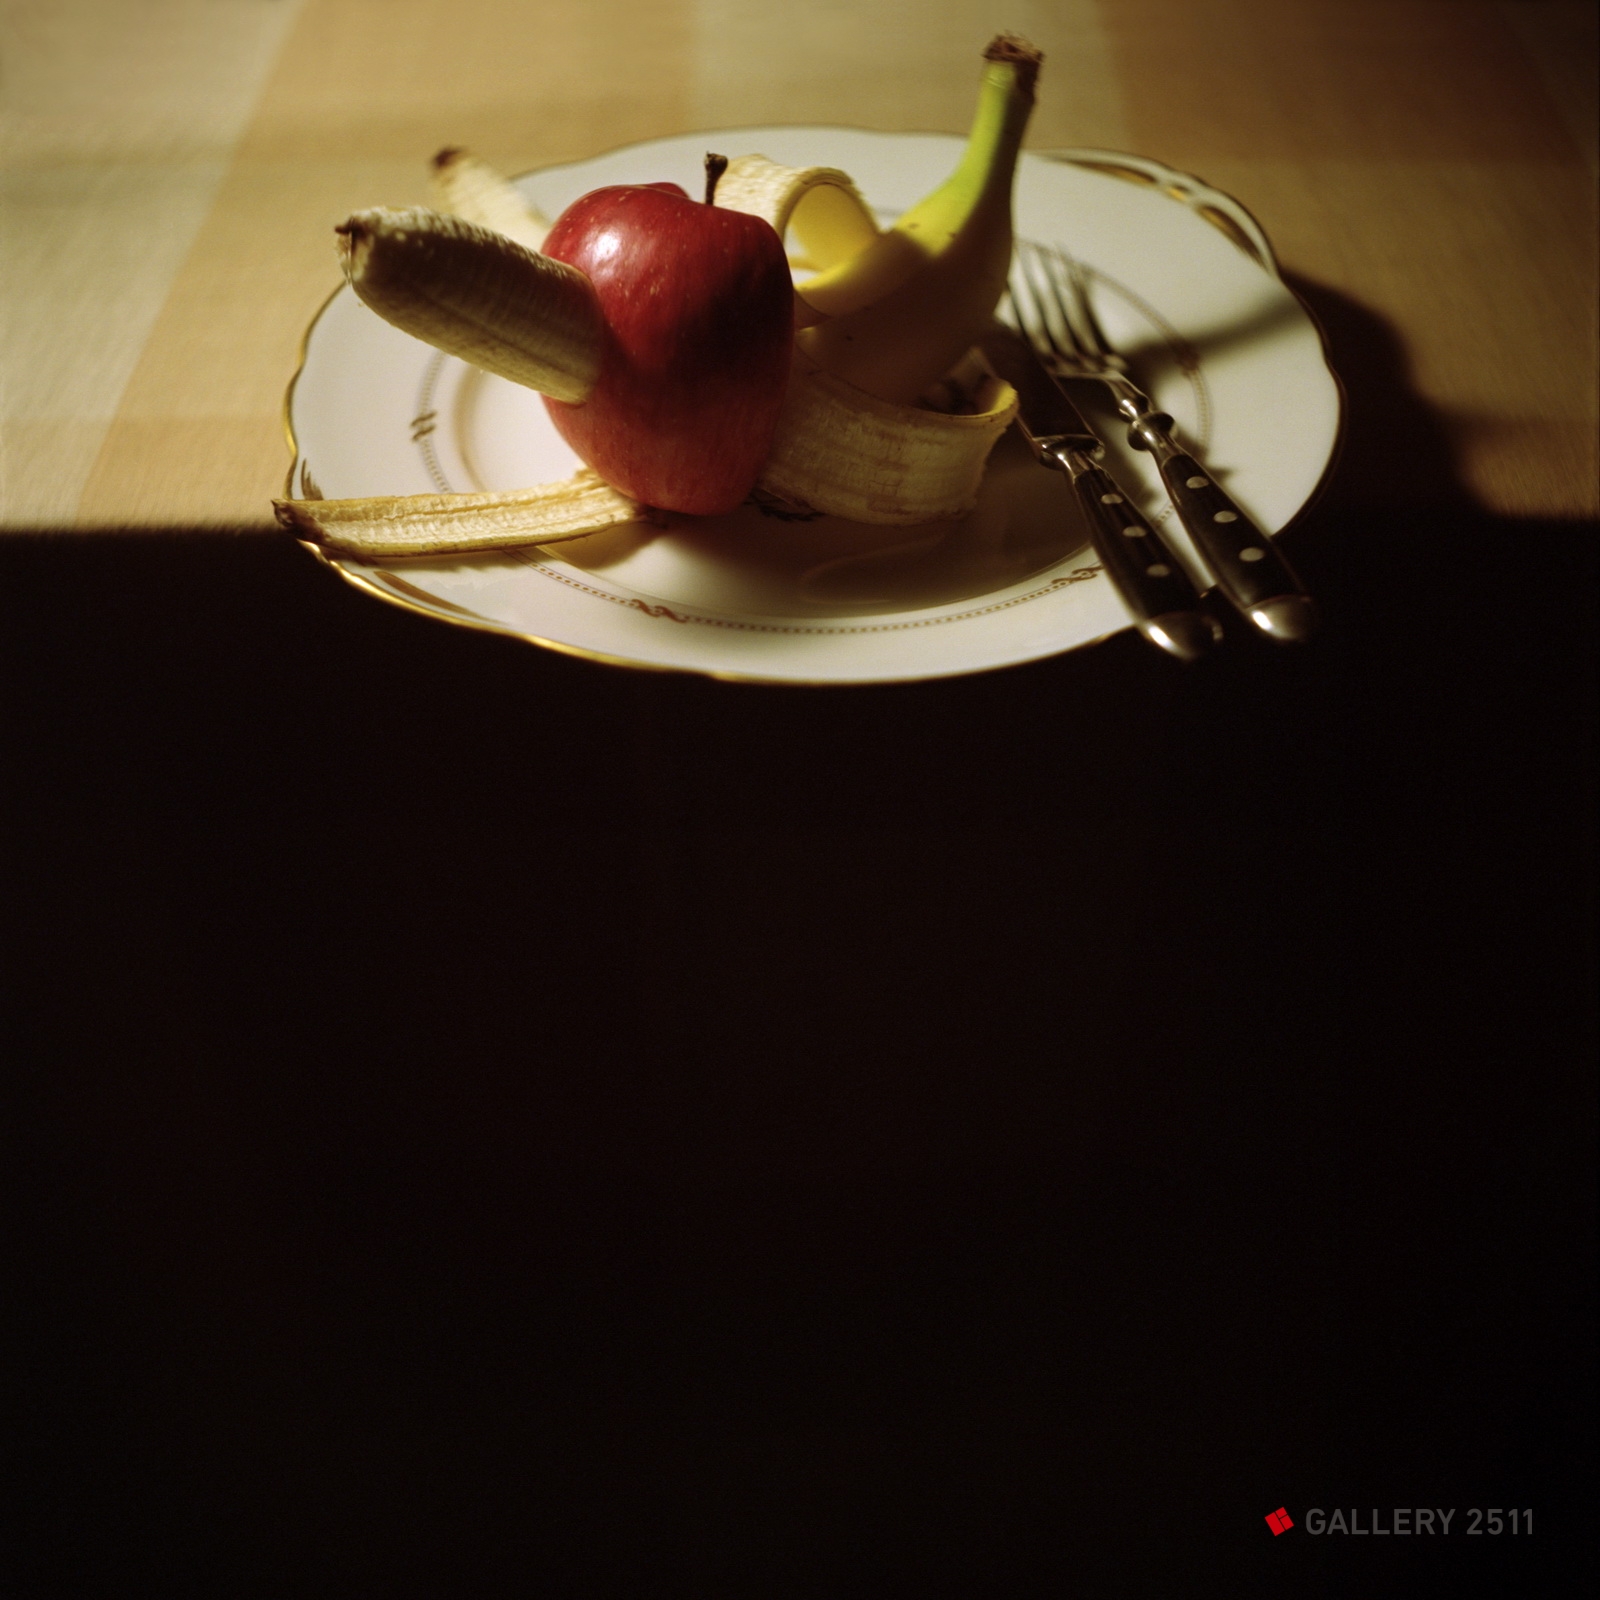 No.149 -「超现实主义餐桌」
2007 Camera：海鸥 4A-103